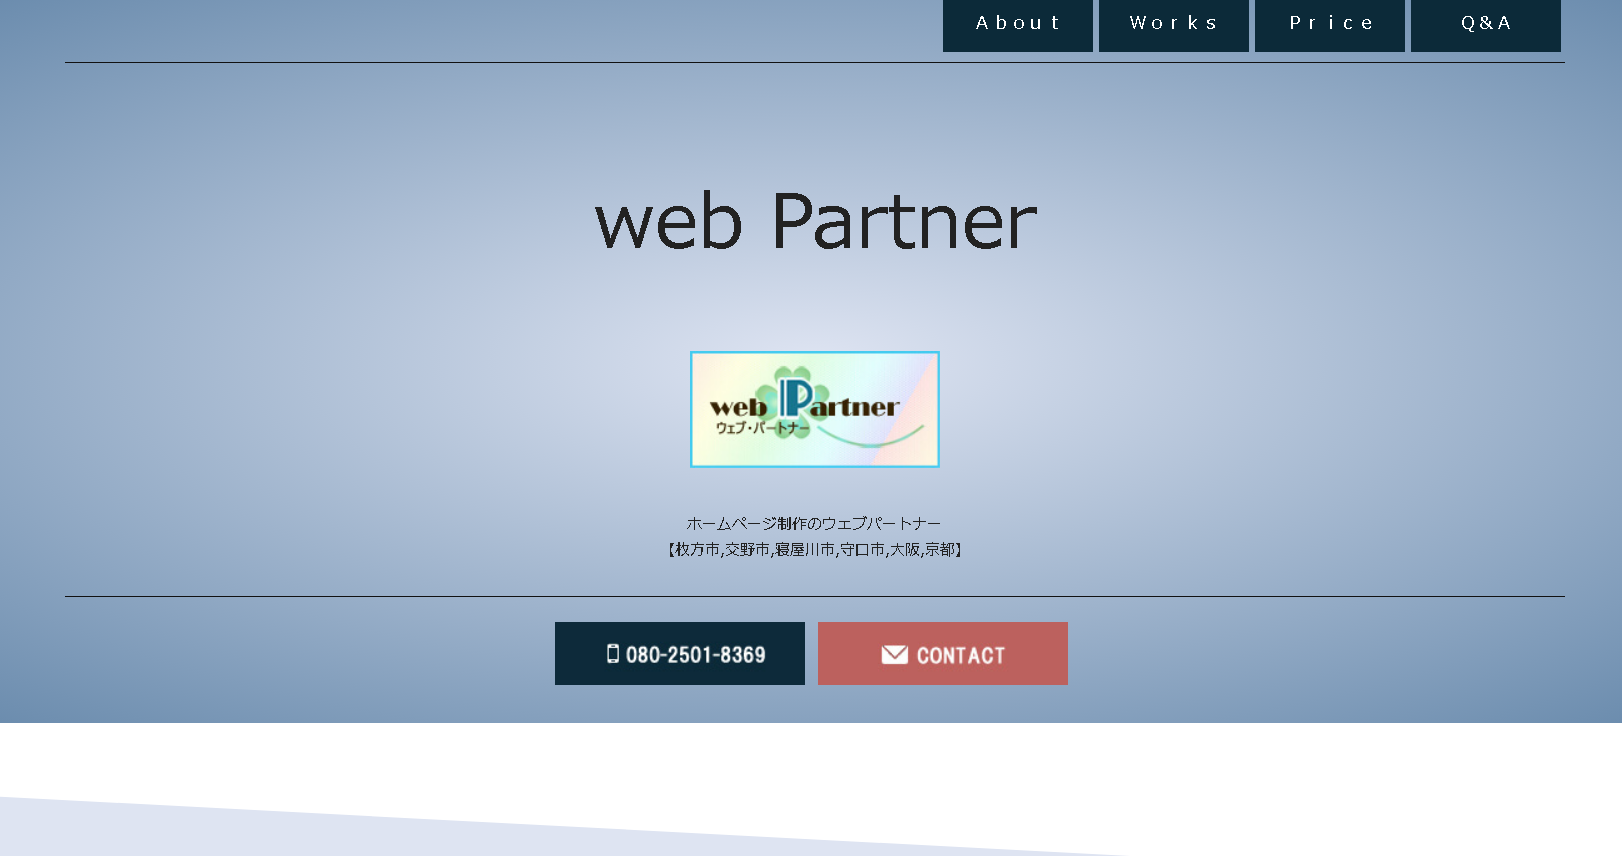 web Partnerのweb Partnerサービス